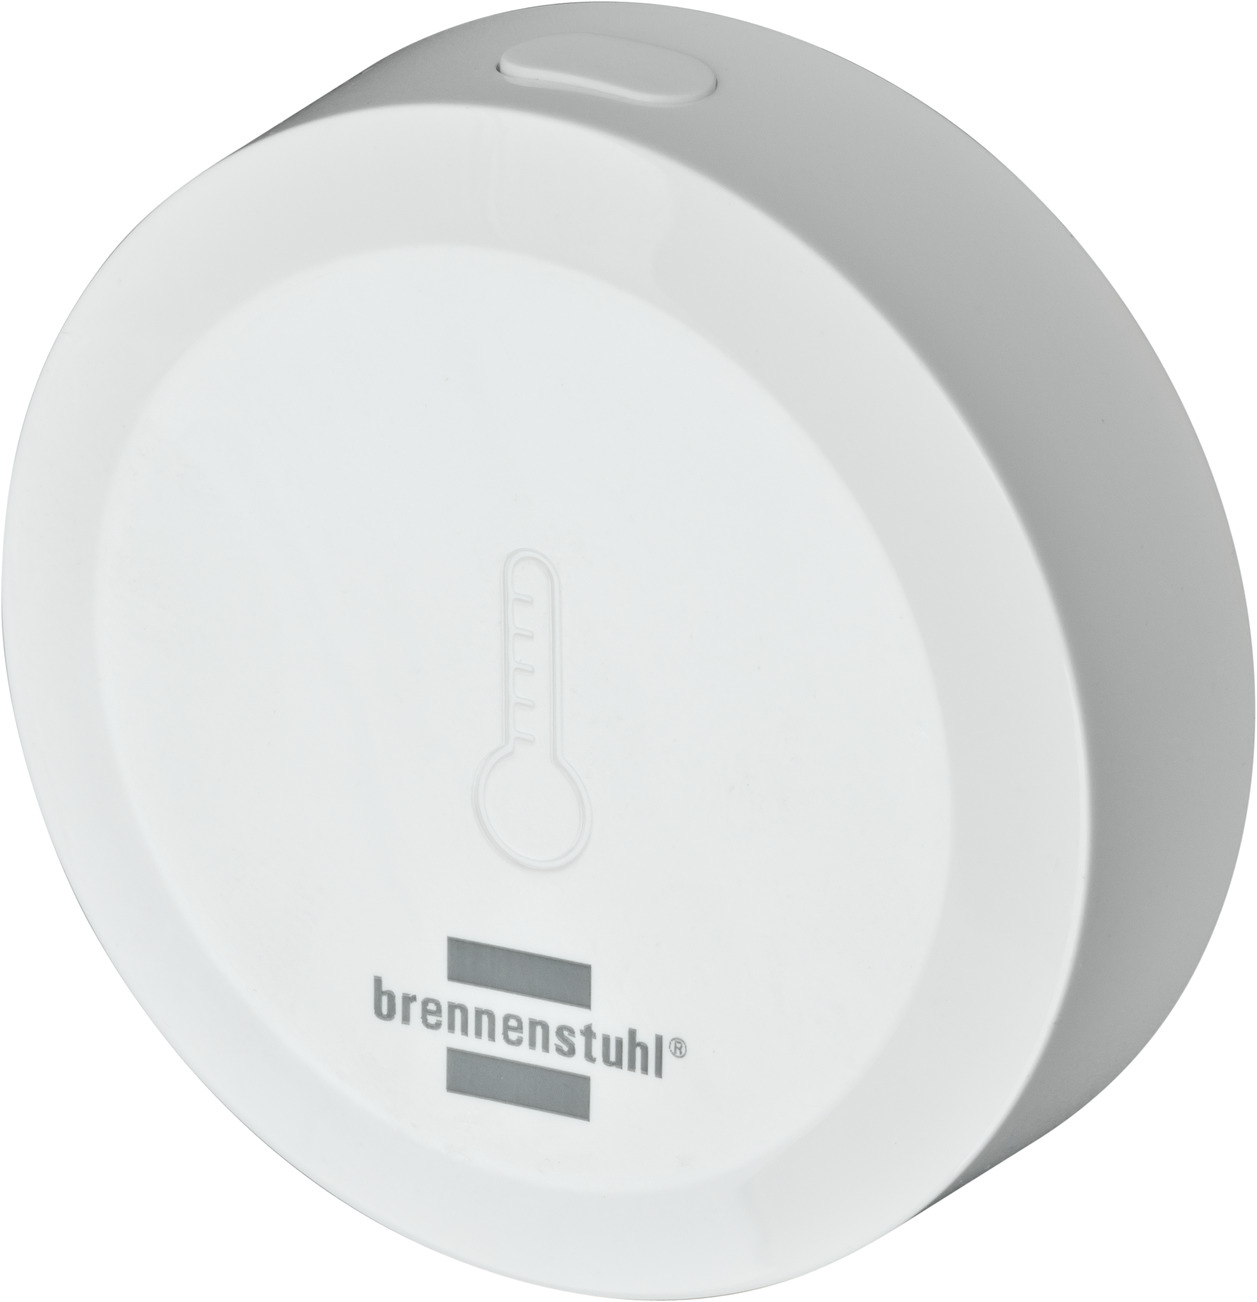 brennenstuhl®Connect Zigbee temperature and humidity sensor TFS CZ 01